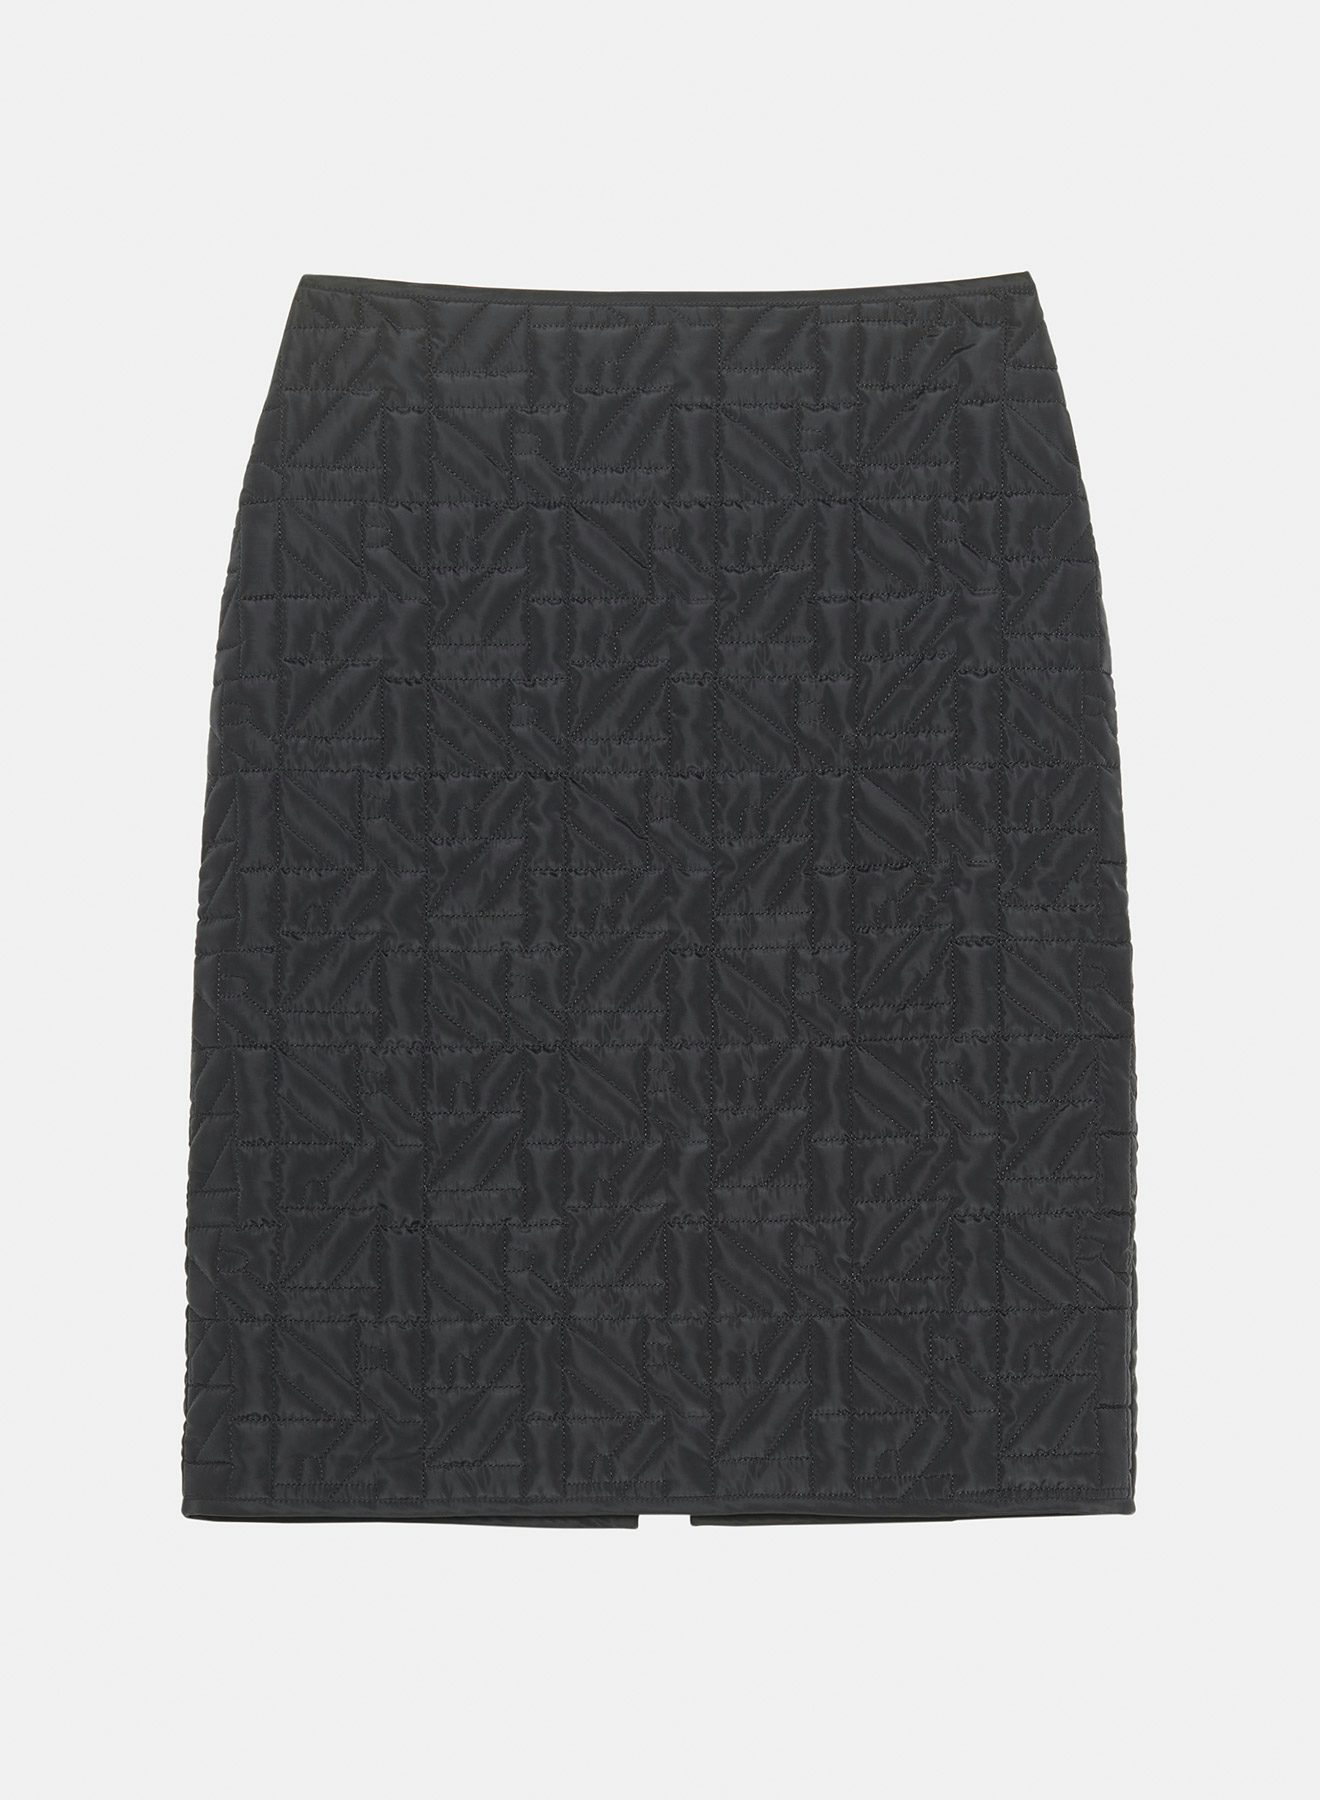 Quilted skirt black - Nina Ricci